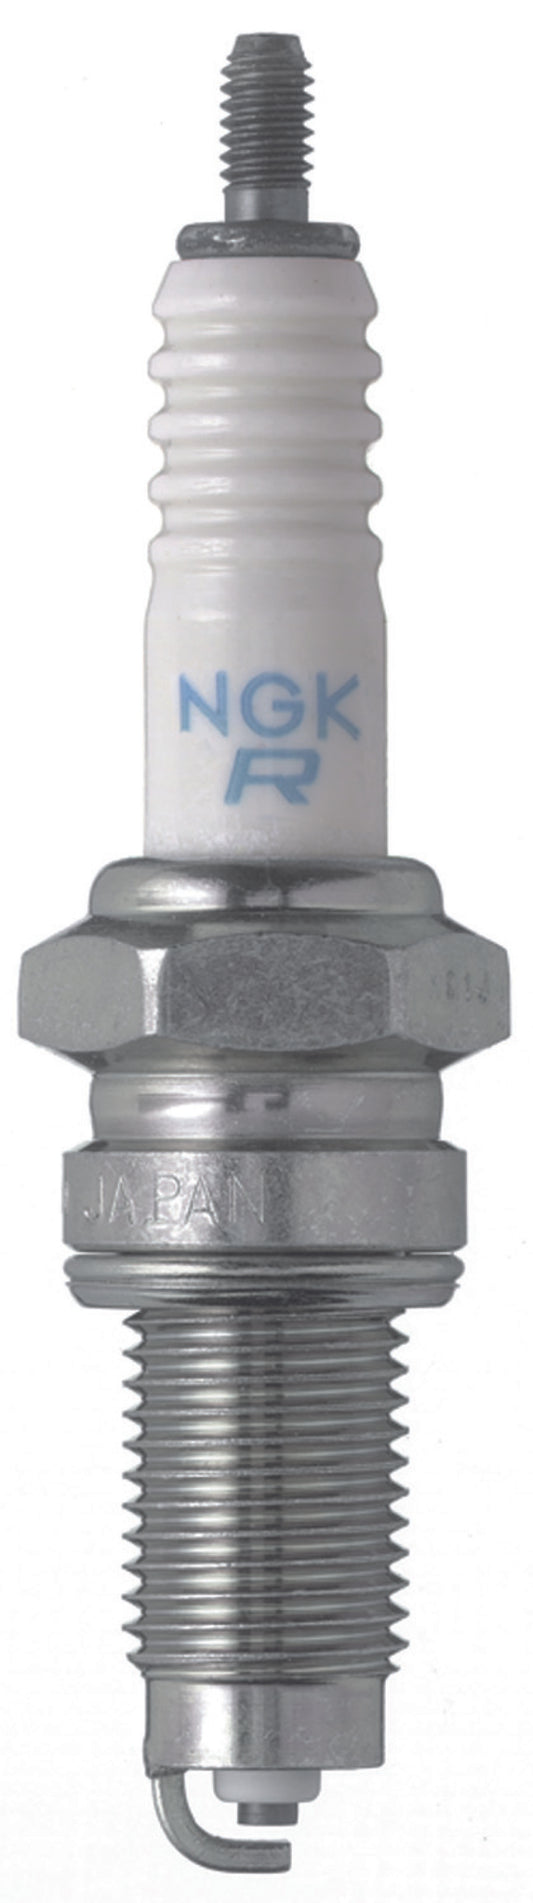 NGK Standard Spark Plug Box of 10 (DPR8Z)